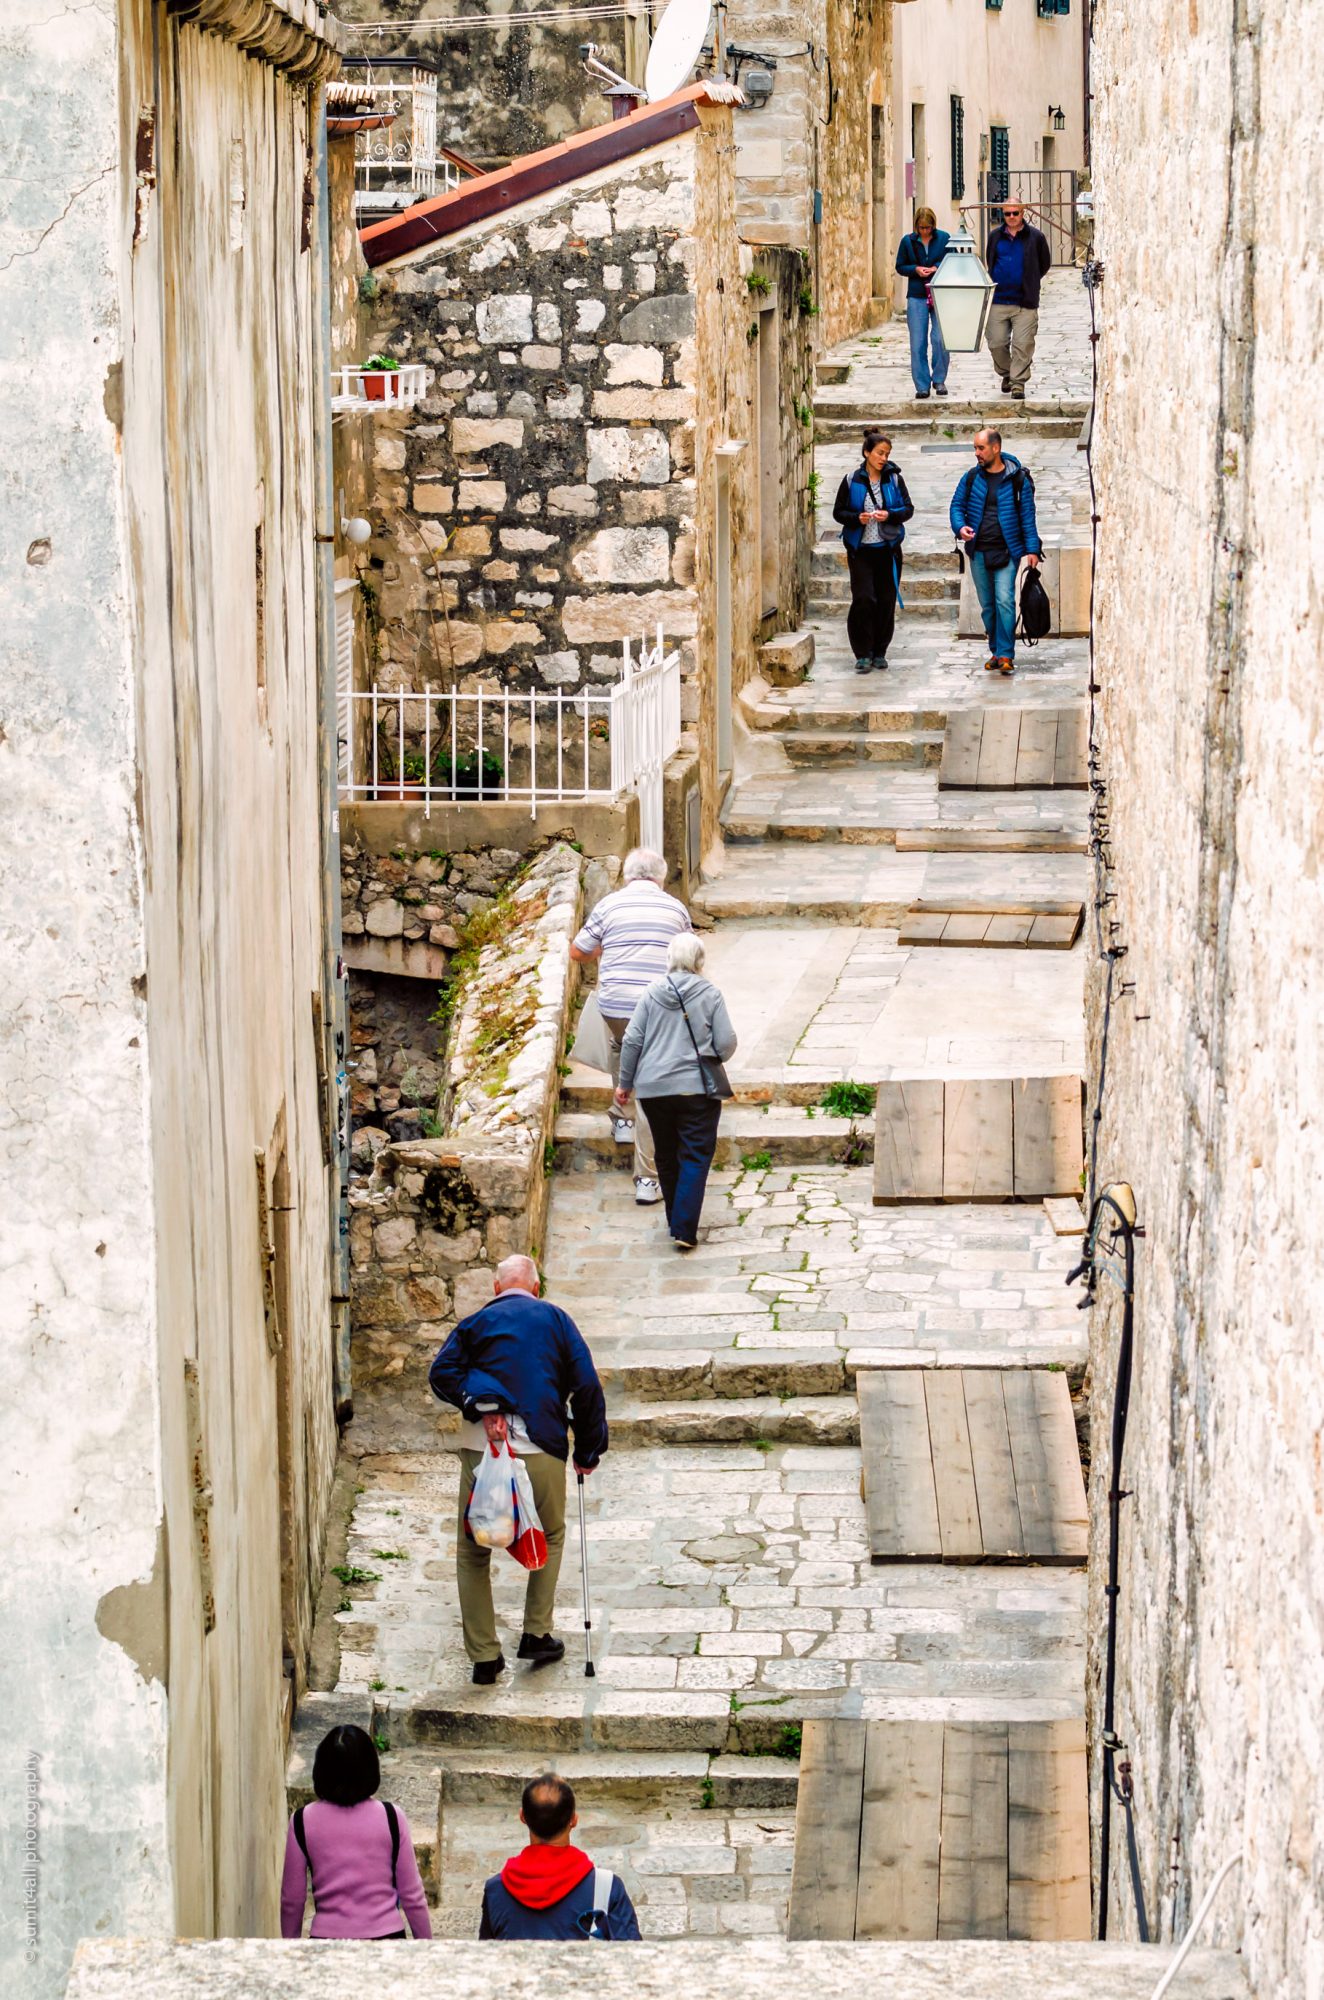 Narrow Street Scene in Old Town, Dubrovnik, Croatia